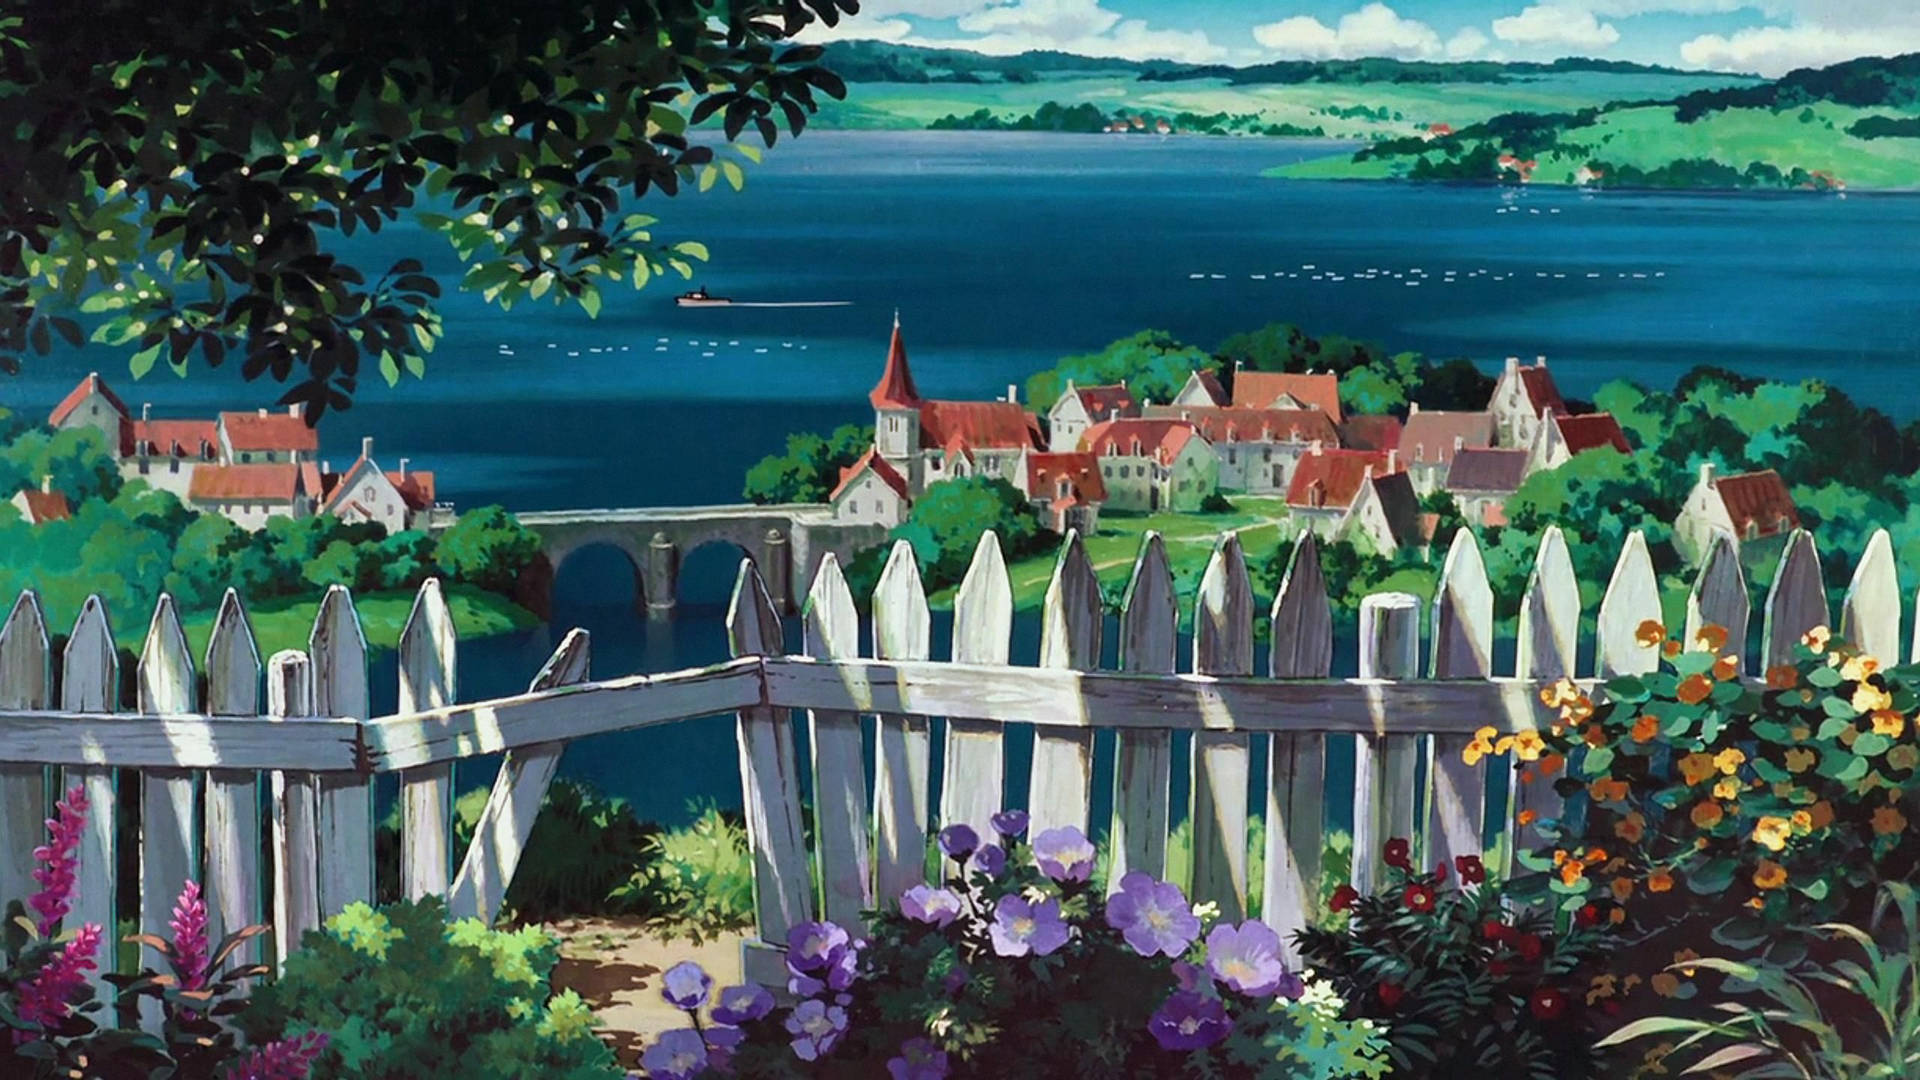 Studio Ghibli Kiki's Delivery Service Background